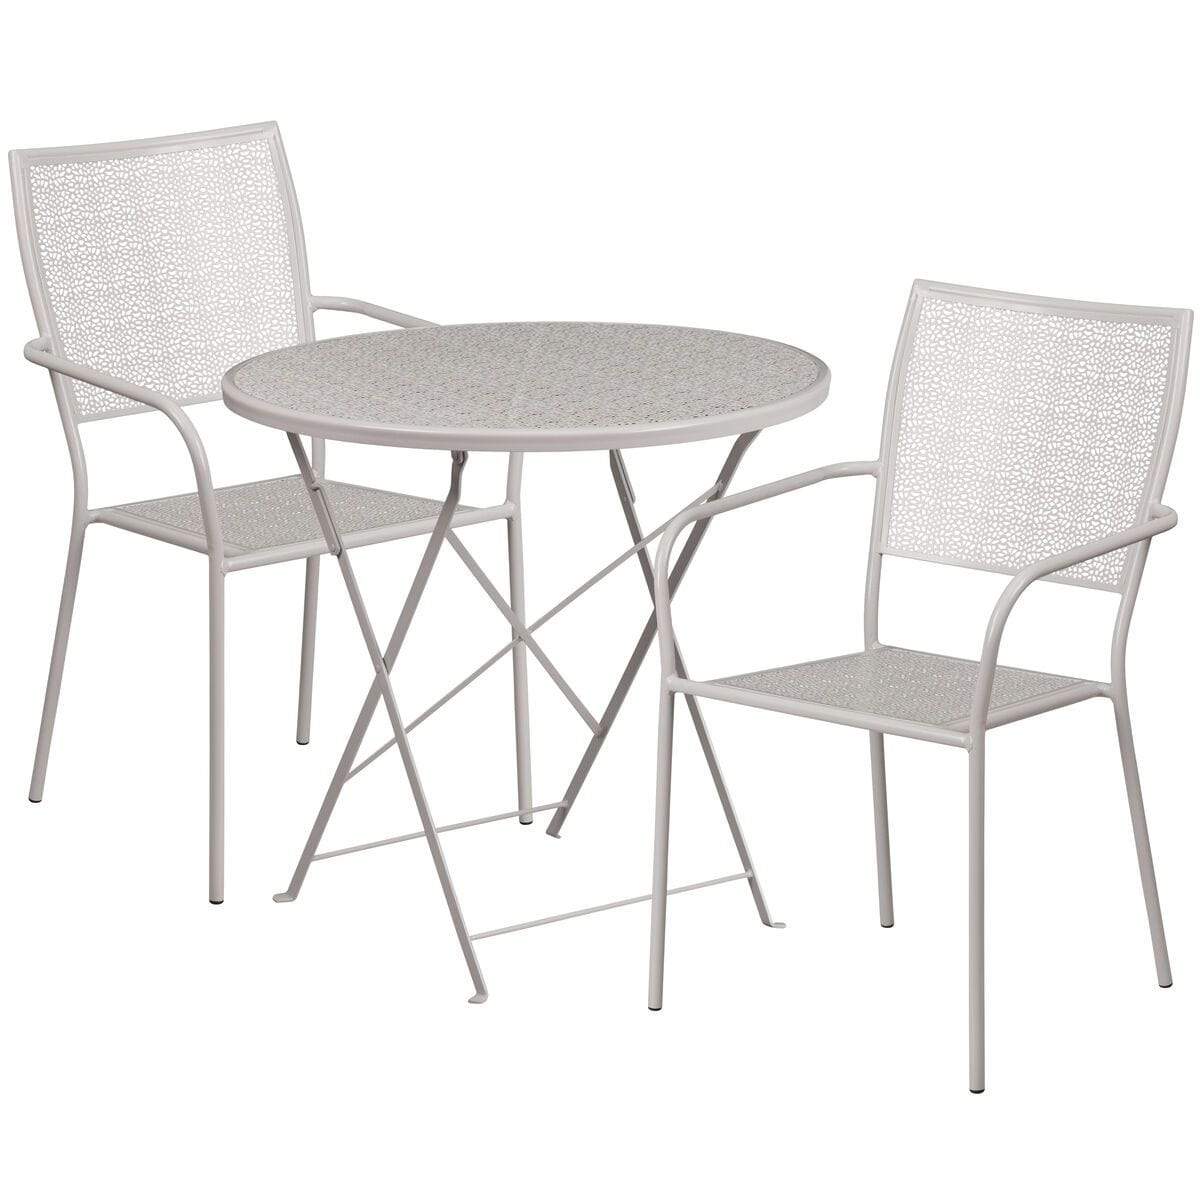 Samuel Norman & Assoc. Furnishings Metal Patio Table and Chair Sets Samuel Norman & Assoc. Furnishings 30RD Gray Fold Patio Set